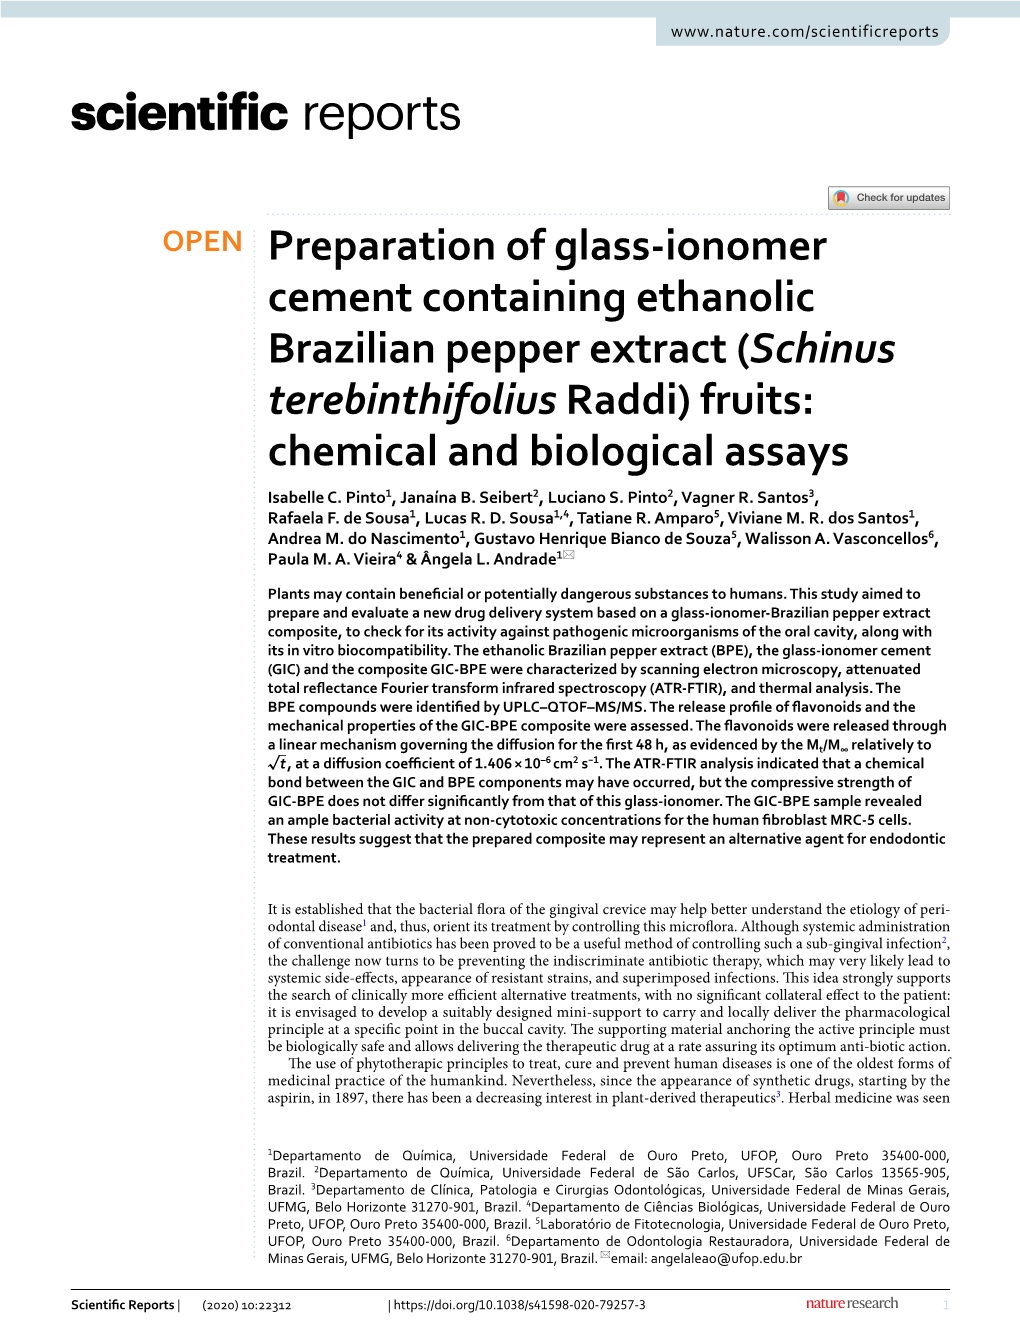 Preparation of Glass-Ionomer Cement Containing Ethanolic Brazilian